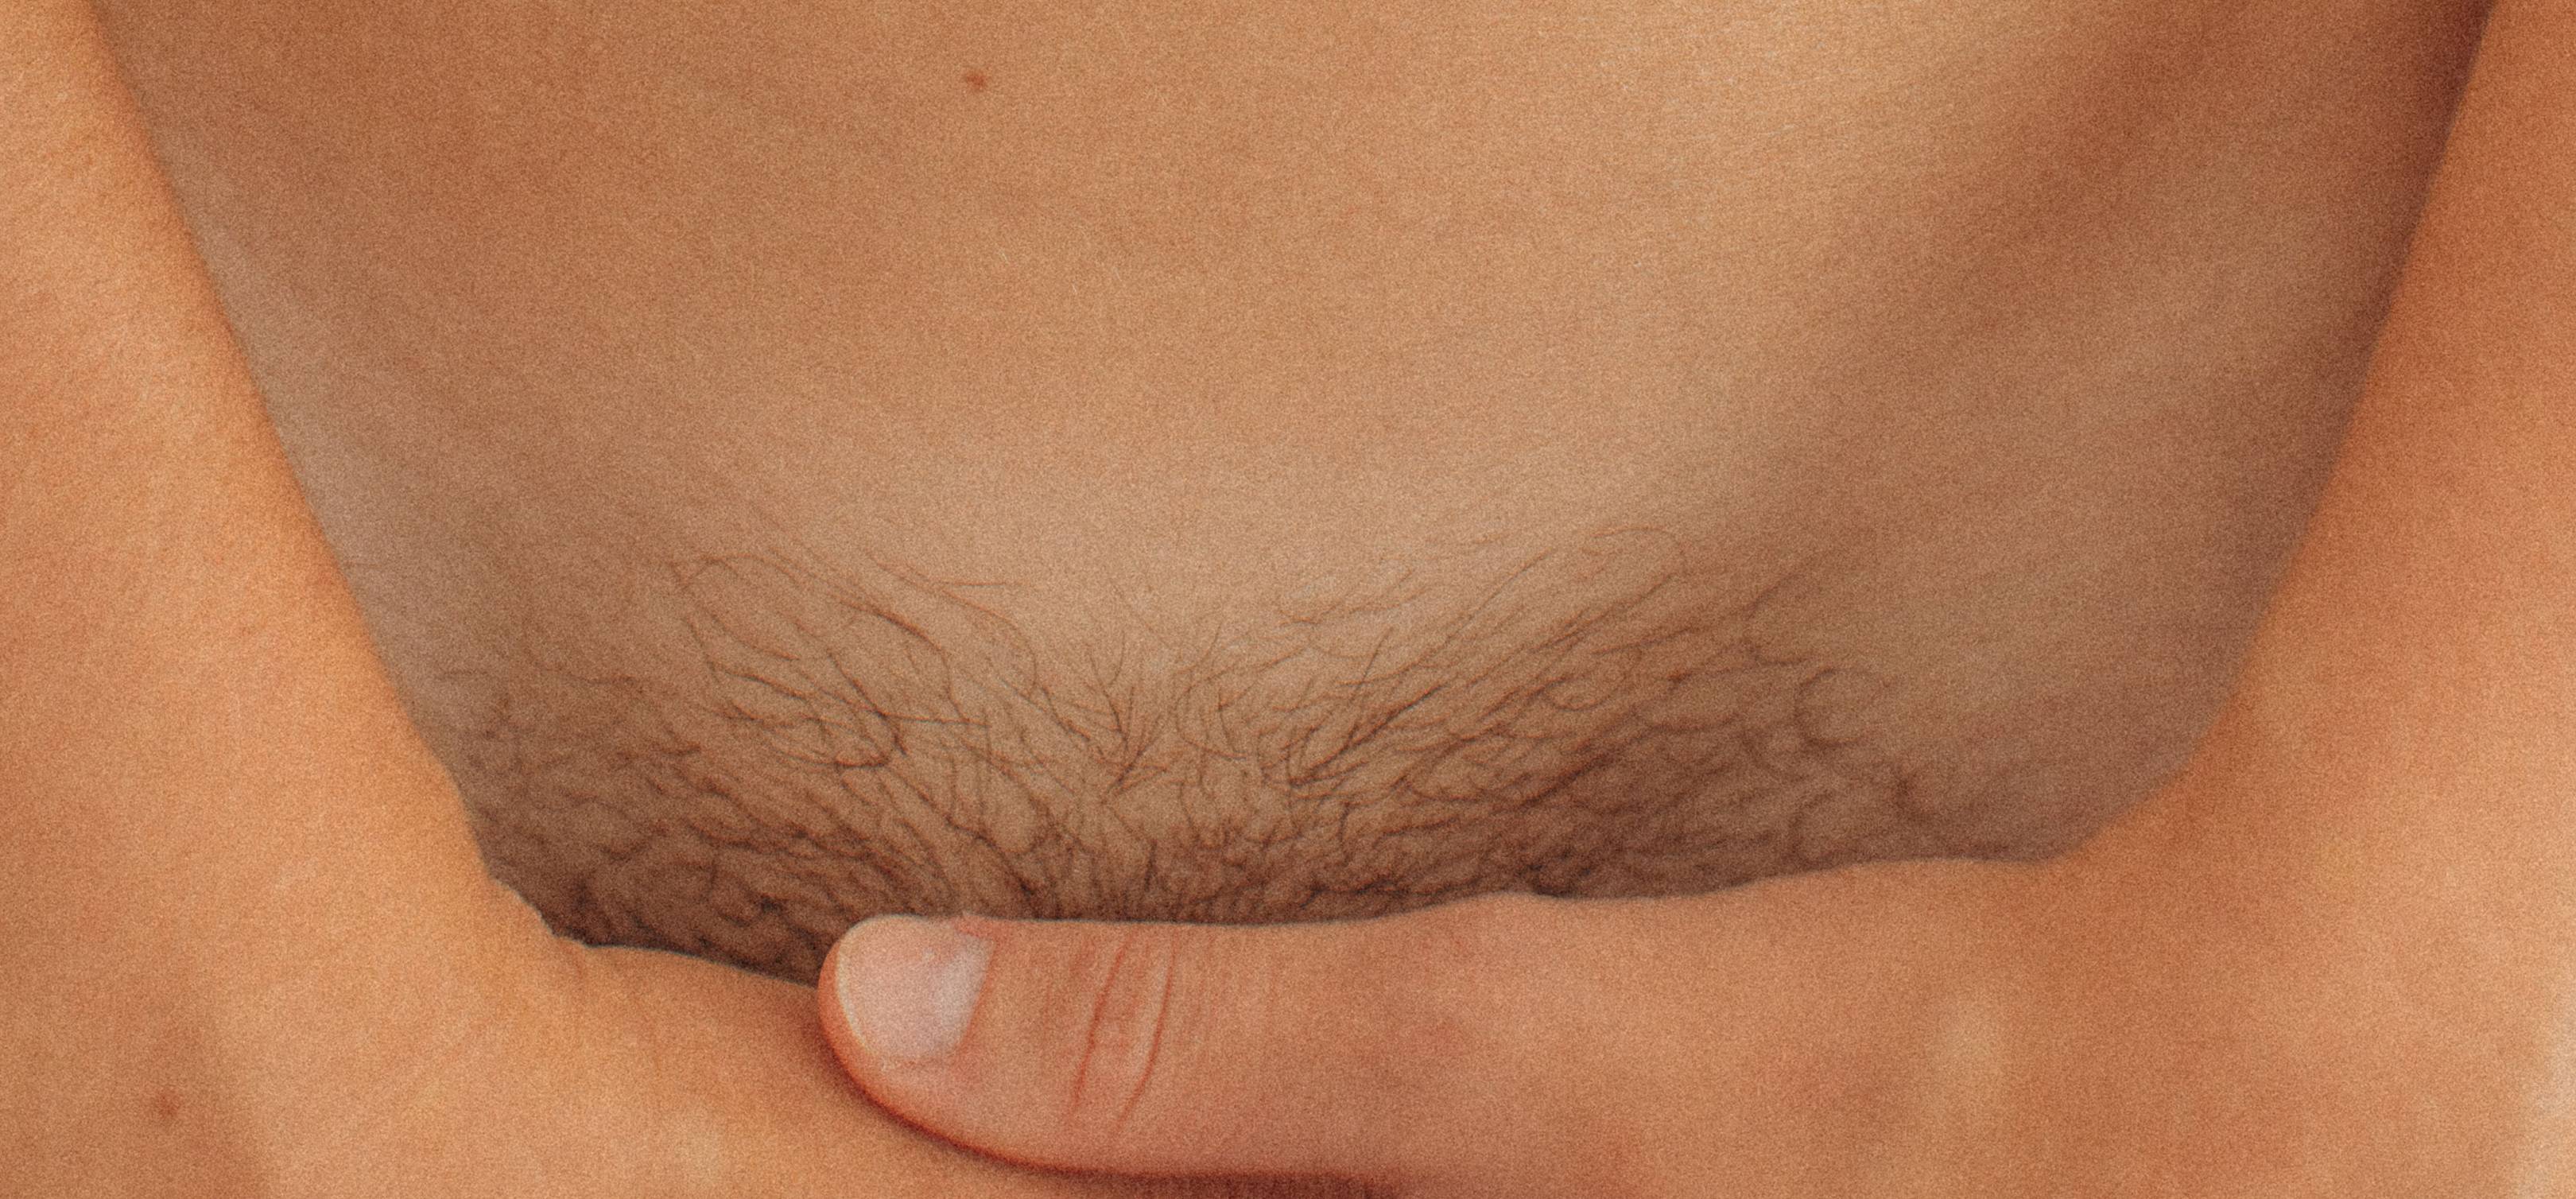 Shaved pubic hair shaving-xxx com hot porn